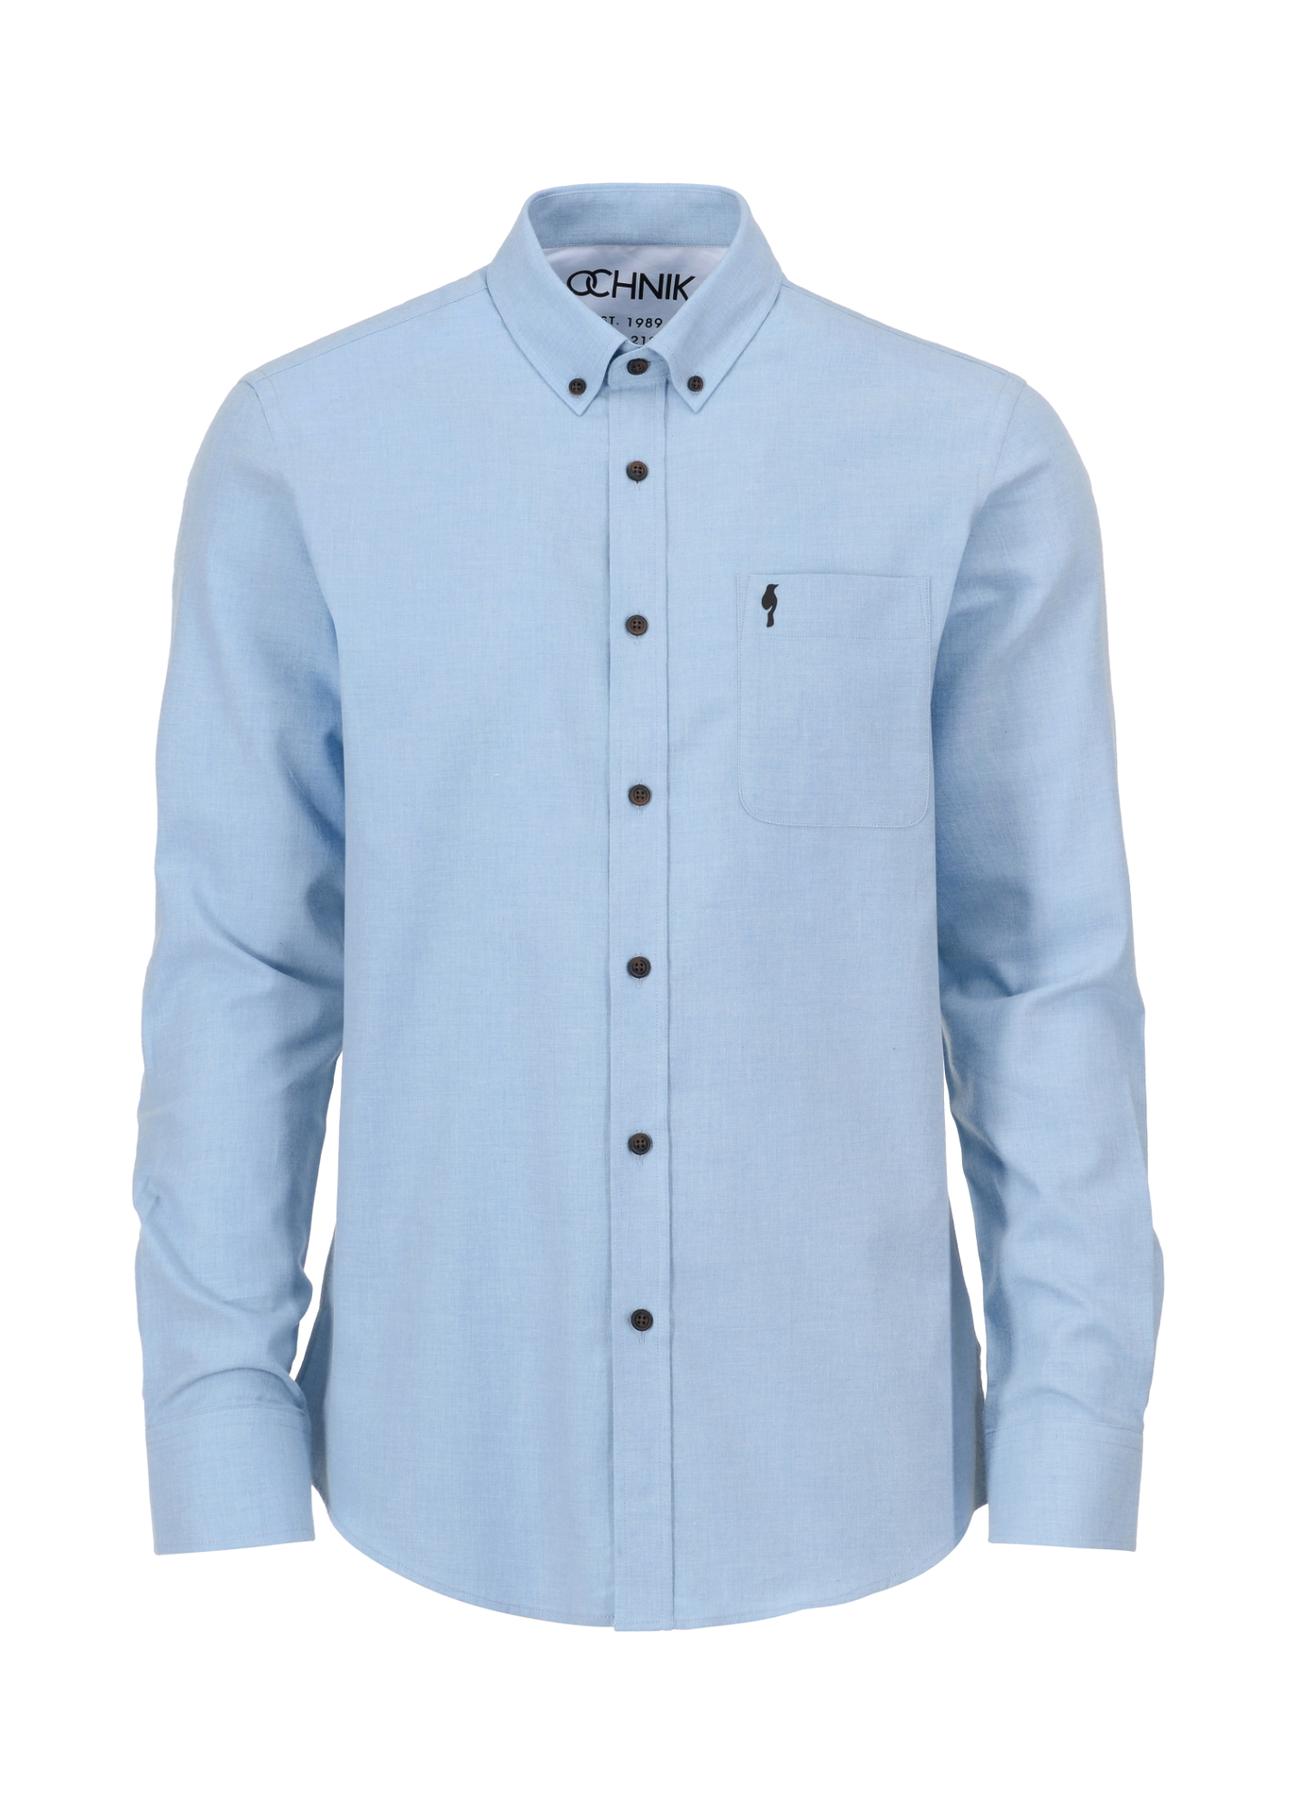 Błękitna bawełniana koszula męska KOSMT-0299-60(Z23)